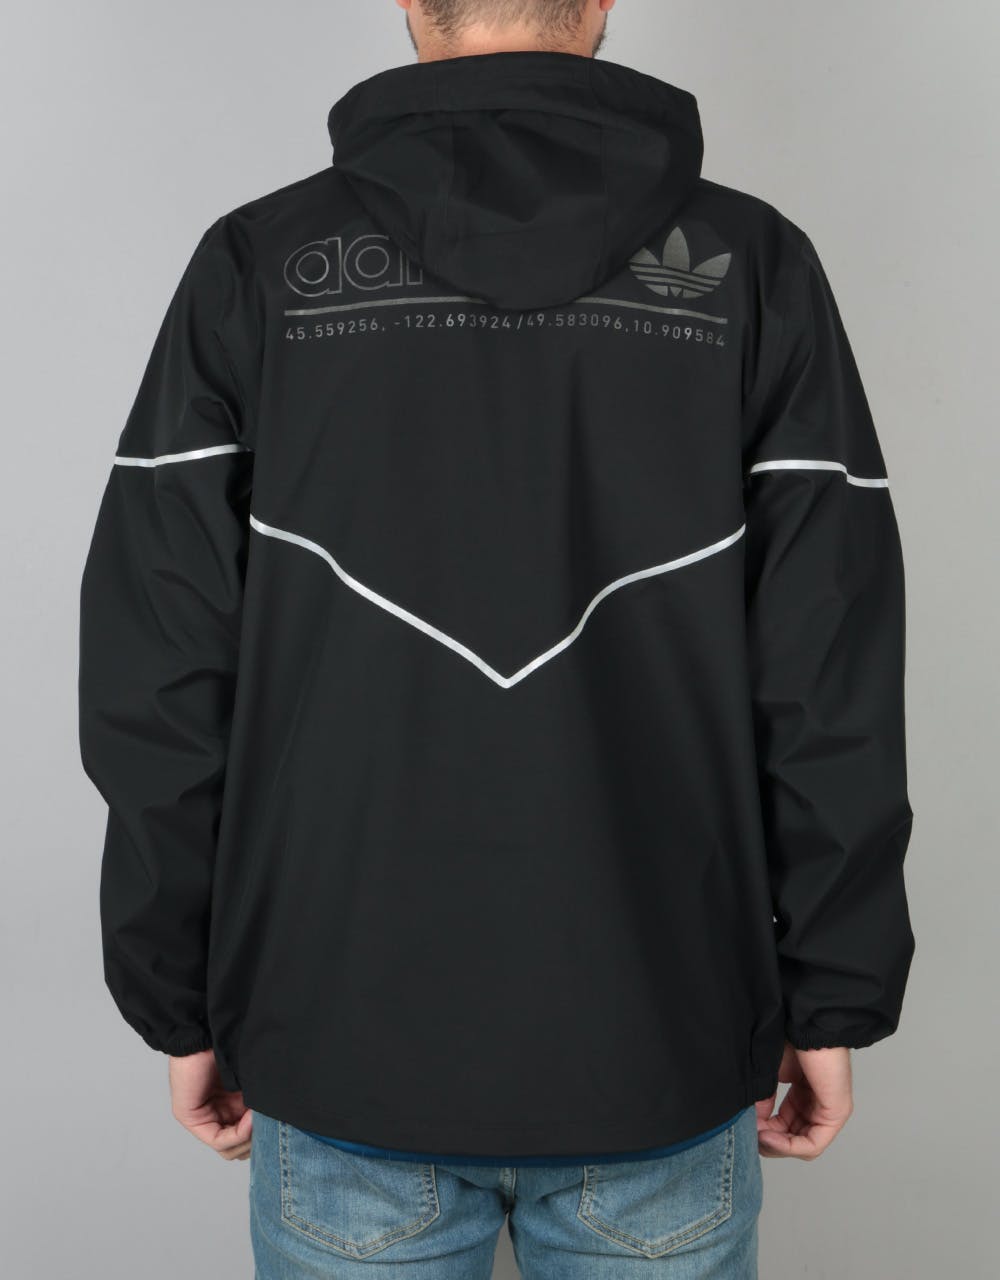 Adidas 3L Premiere Jacket - Black/Reflective